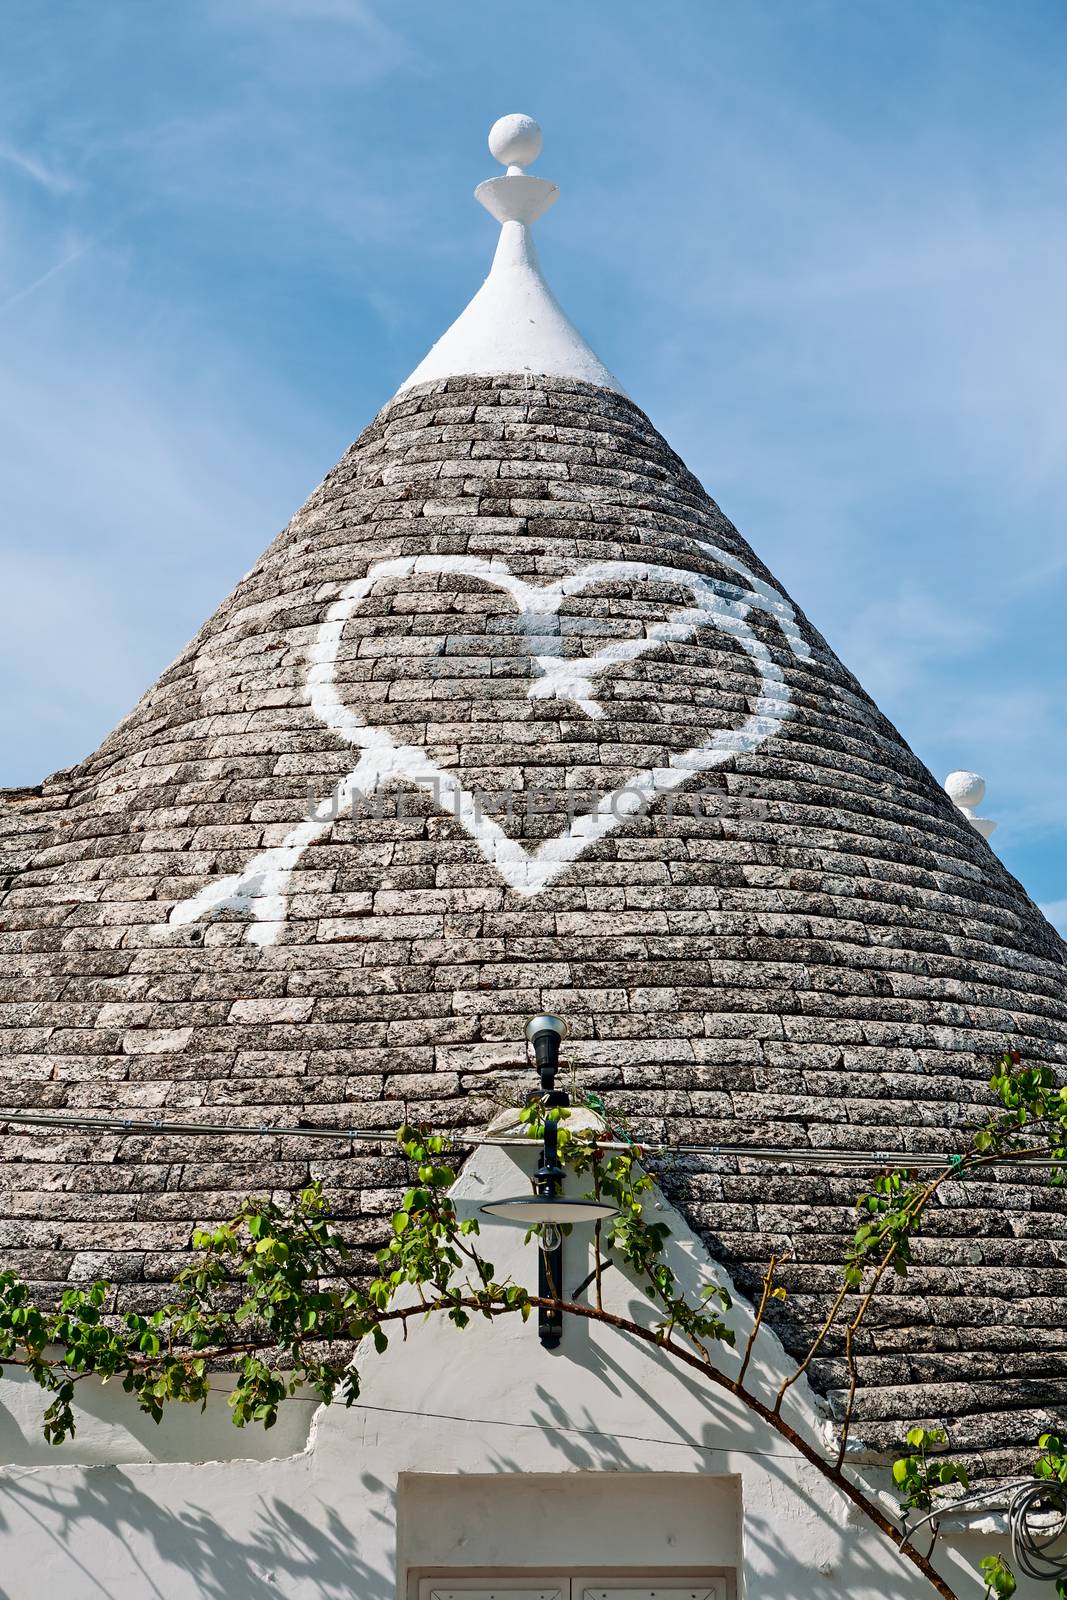 Symbol in the Trullo conical rooftop in Alberobello under a blue sky, Apulia, Italy